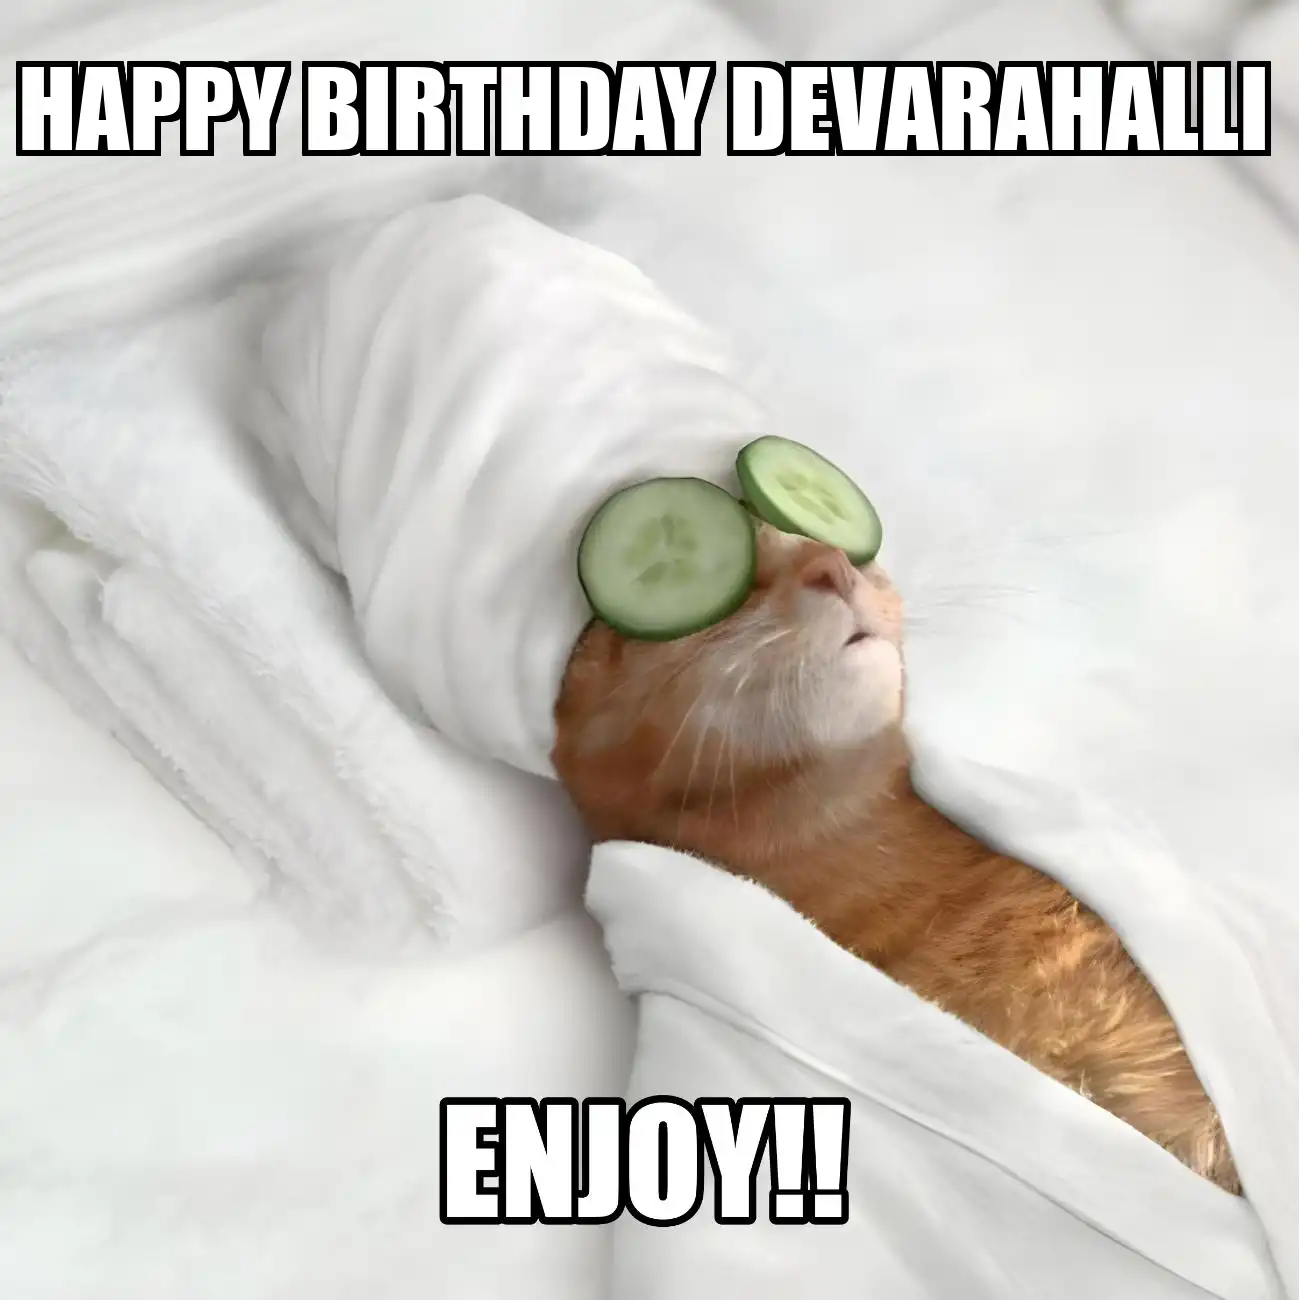 Happy Birthday Devarahalli Enjoy Cat Meme